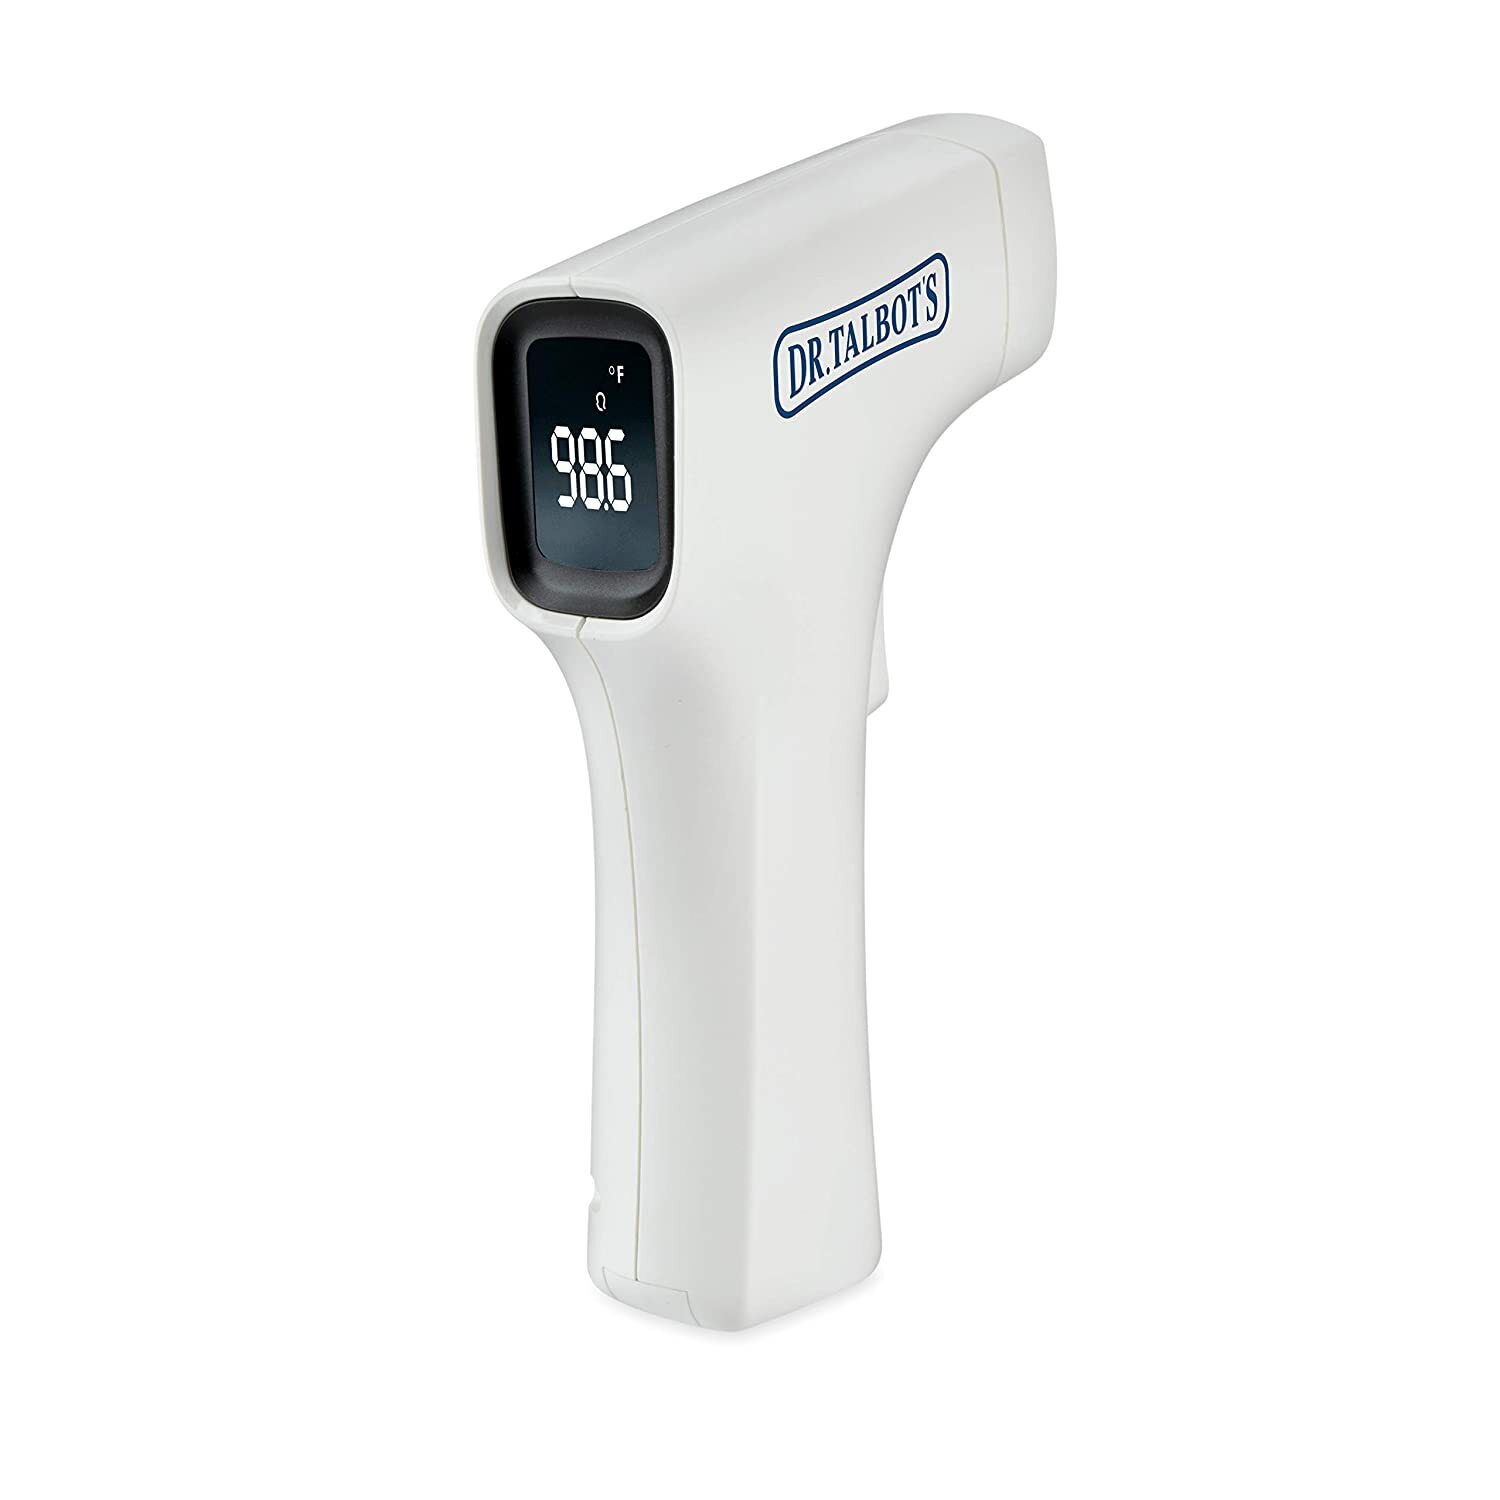 DrTalbots infrarood thermometer